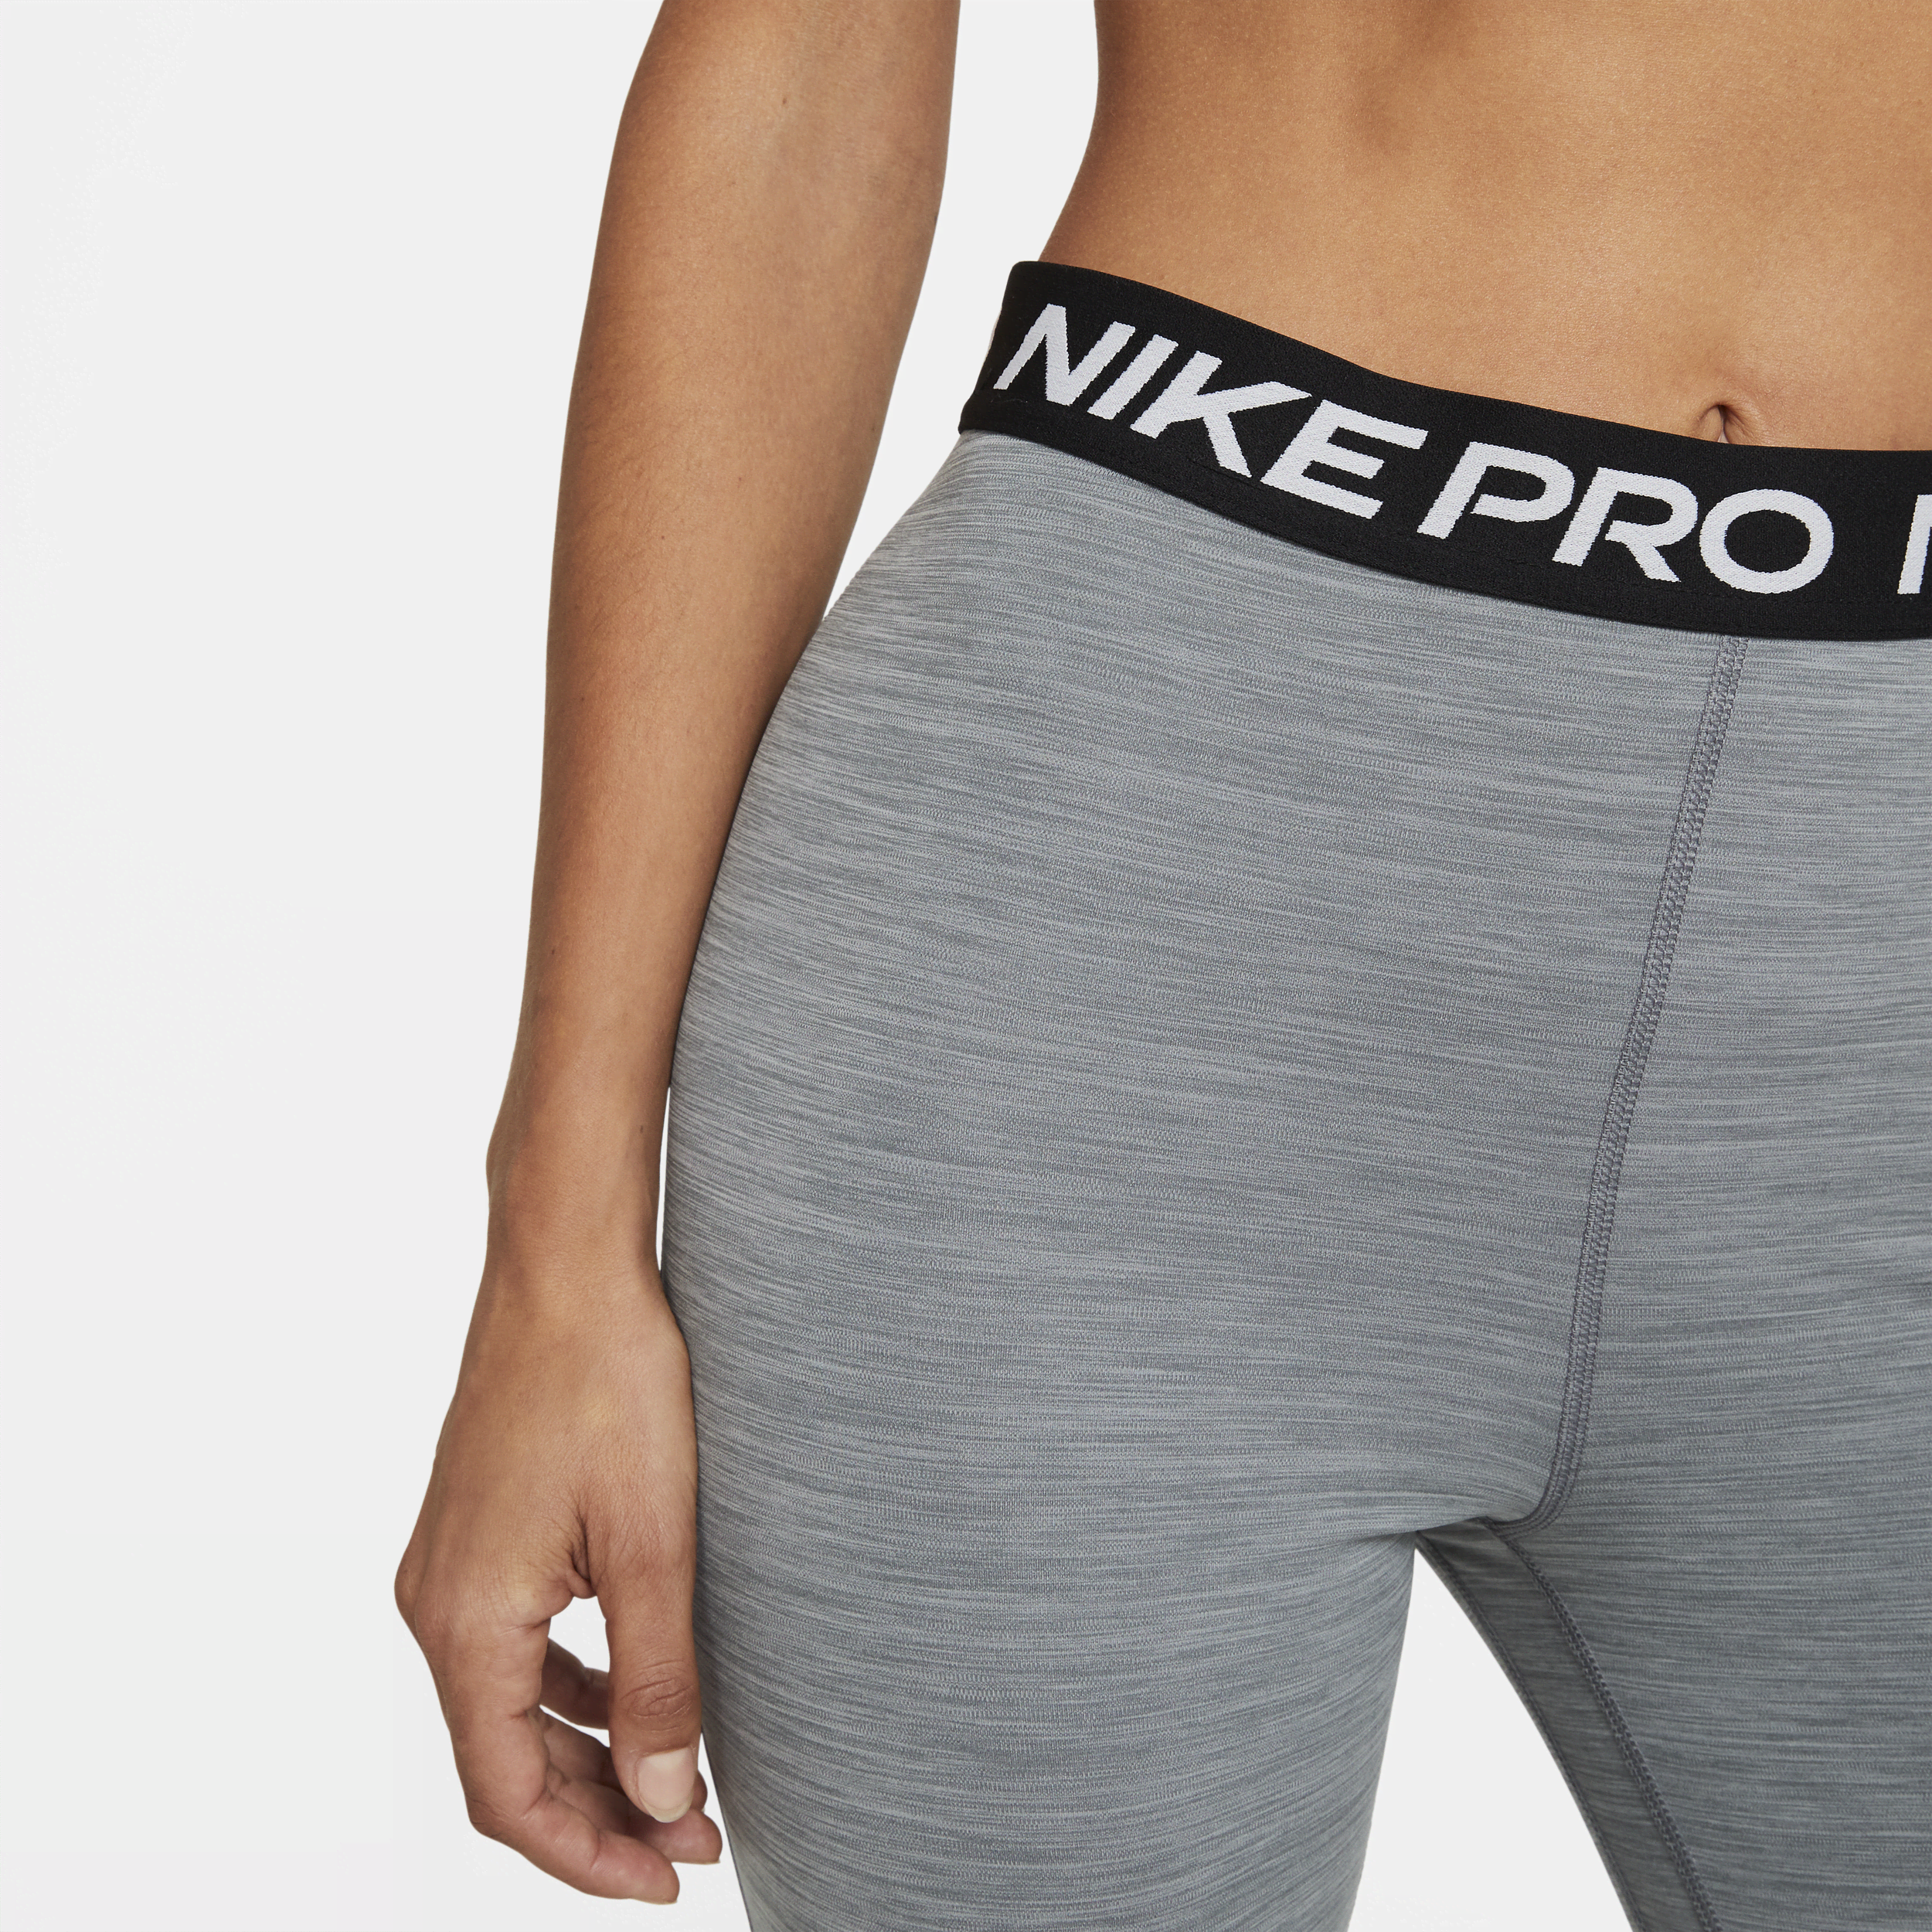 Nike Pro Training cropped leggings in grey | ASOS | Grey nike leggings, Gym  clothes women, Cute workout outfits